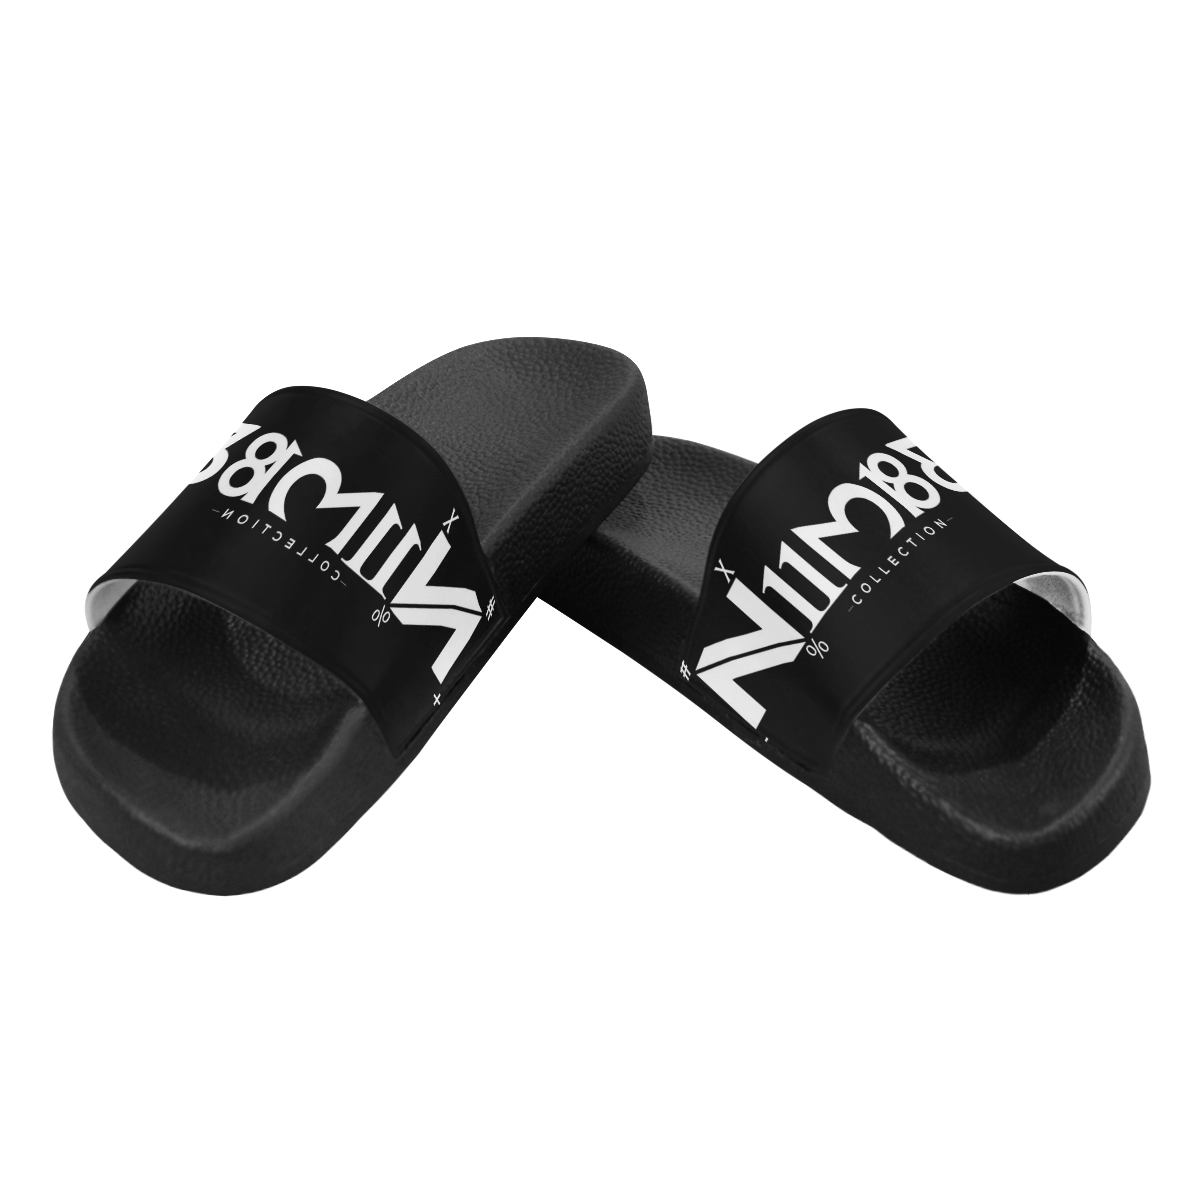 NUMBERS Collection White/Black Men's Slide Sandals (Model 057)